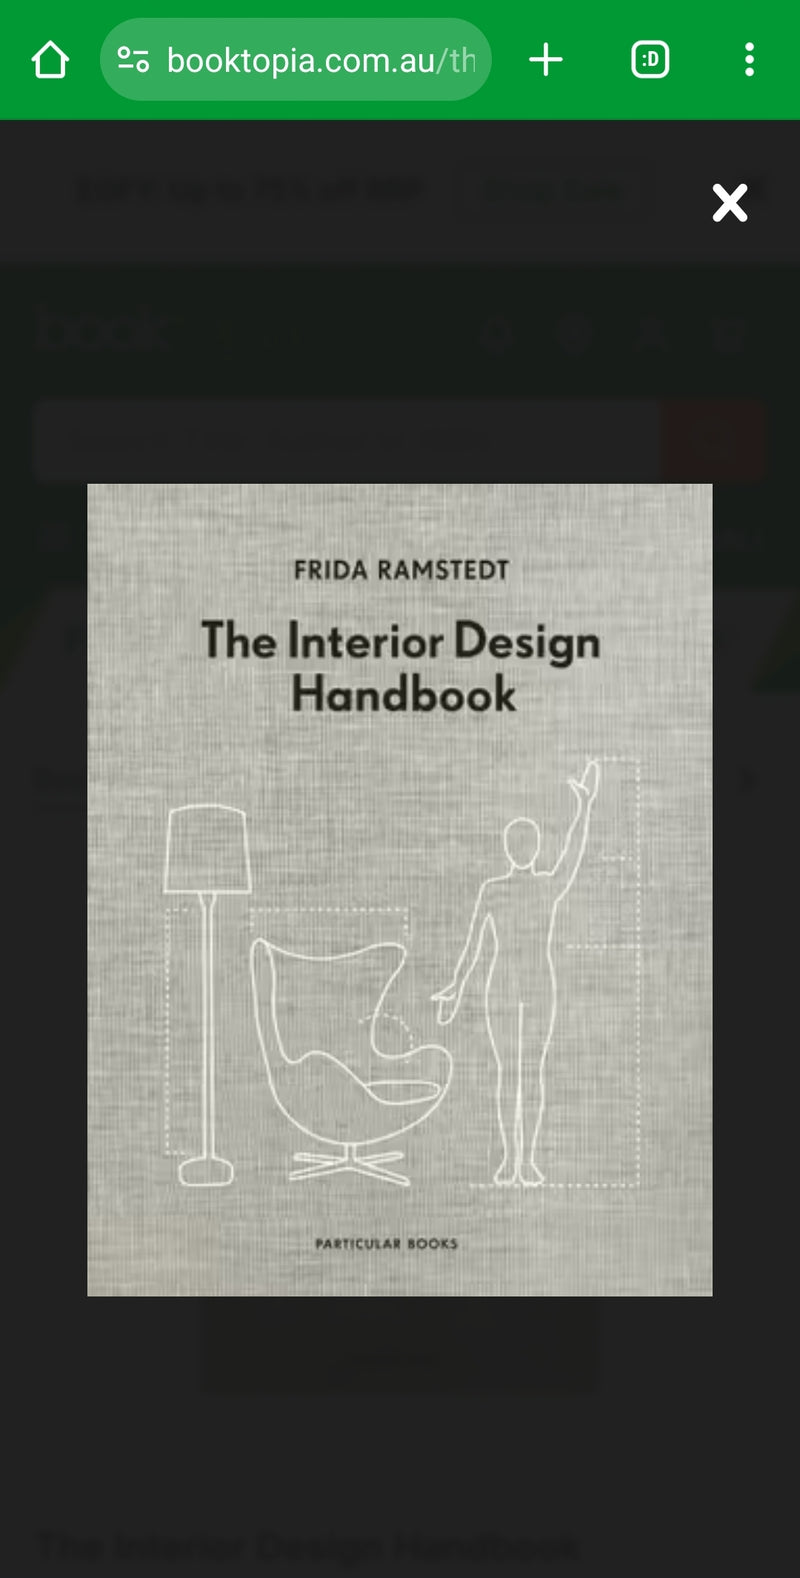 The interior design book handbook